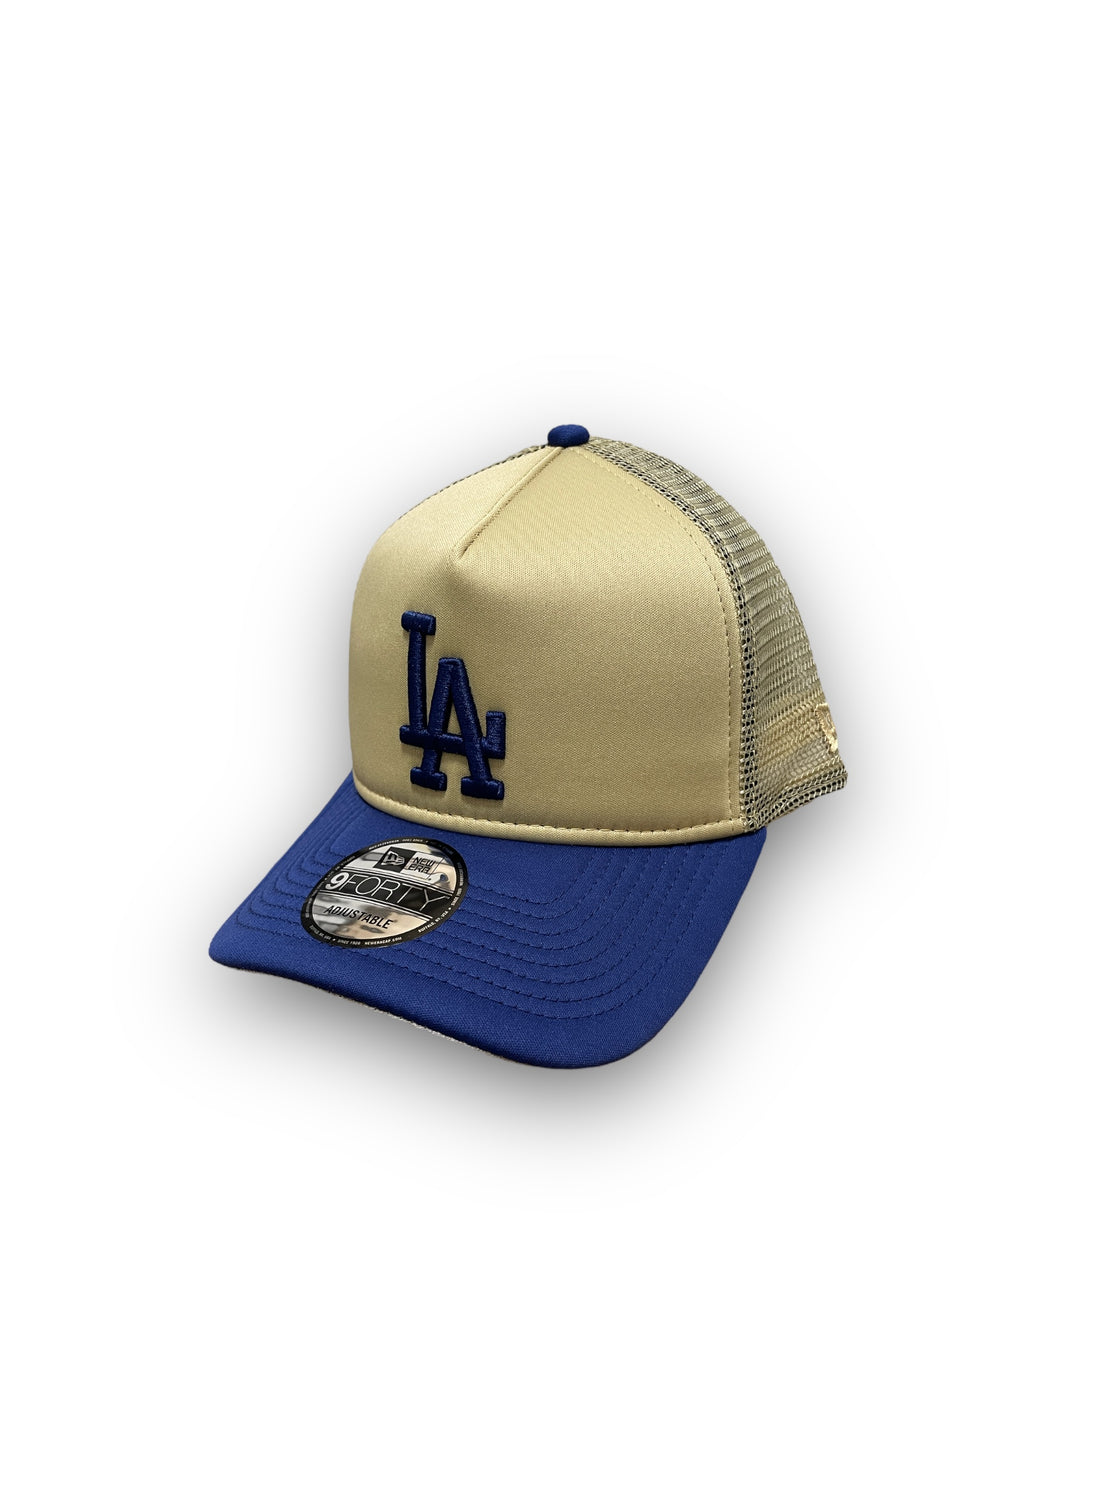 Los Angeles Dodgers TRUCKER SNAP Tan/Blu